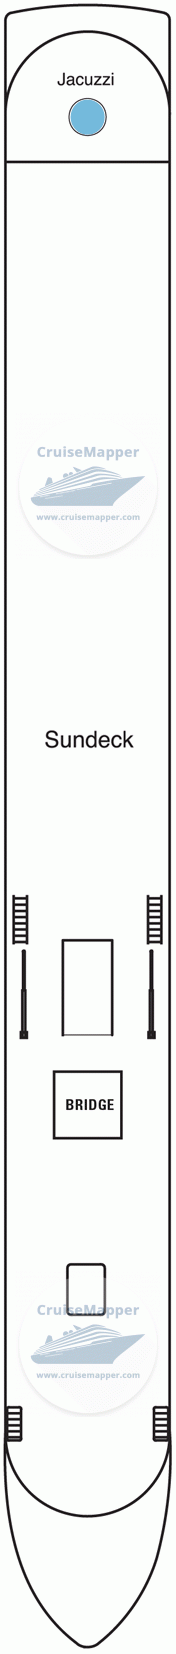 SS Beatrice Deck 05 - Sun